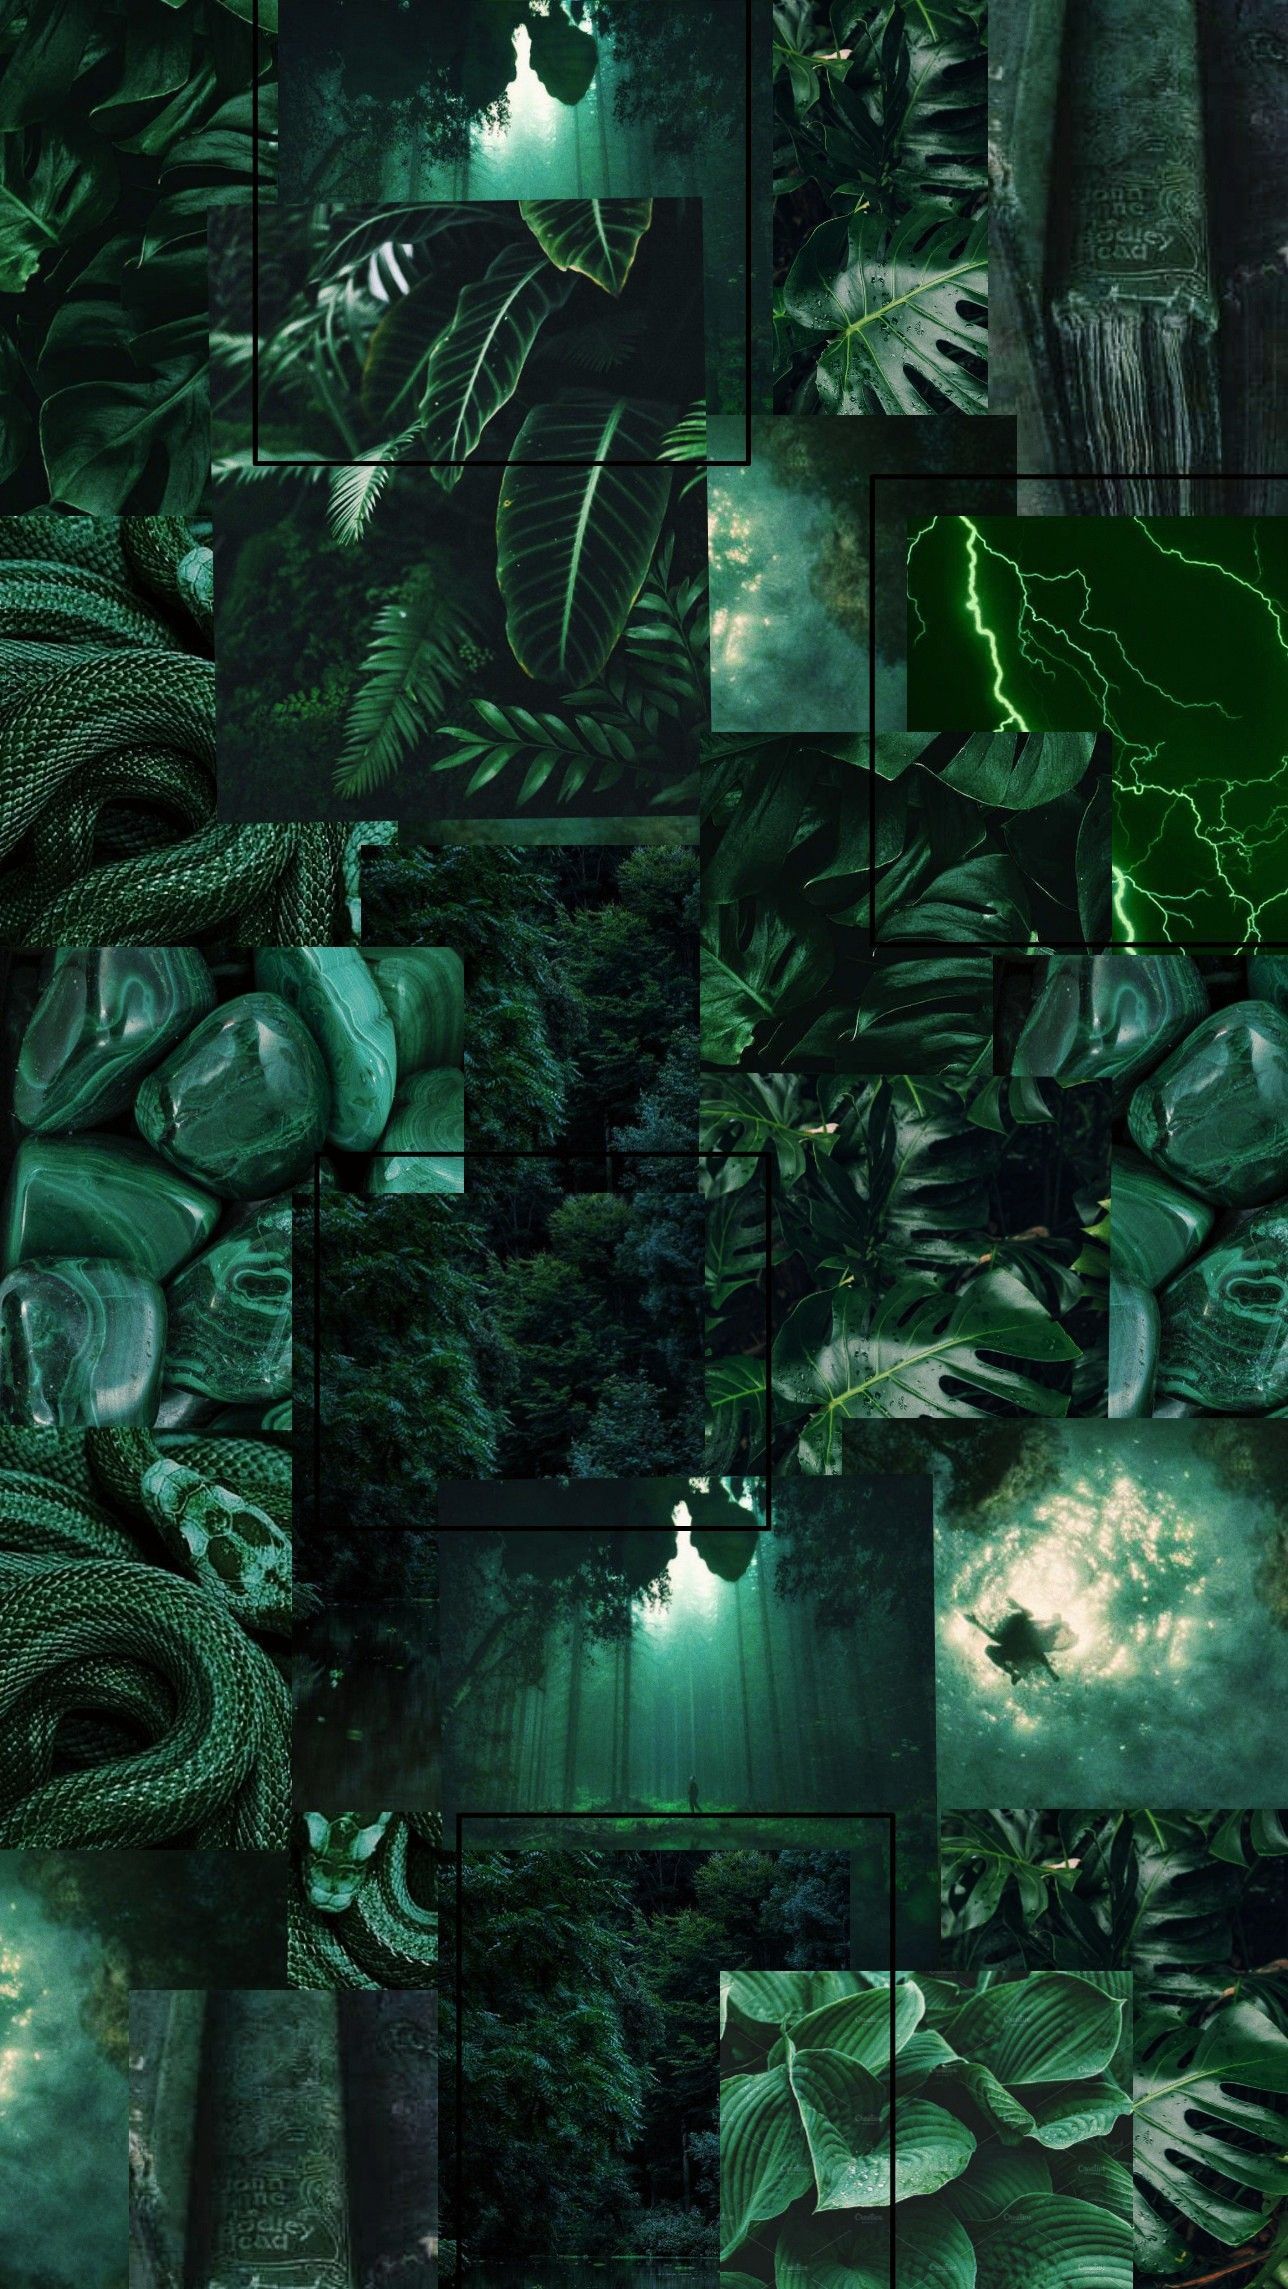 Green aesthetic wallpaper for phone and desktop. - Dark green